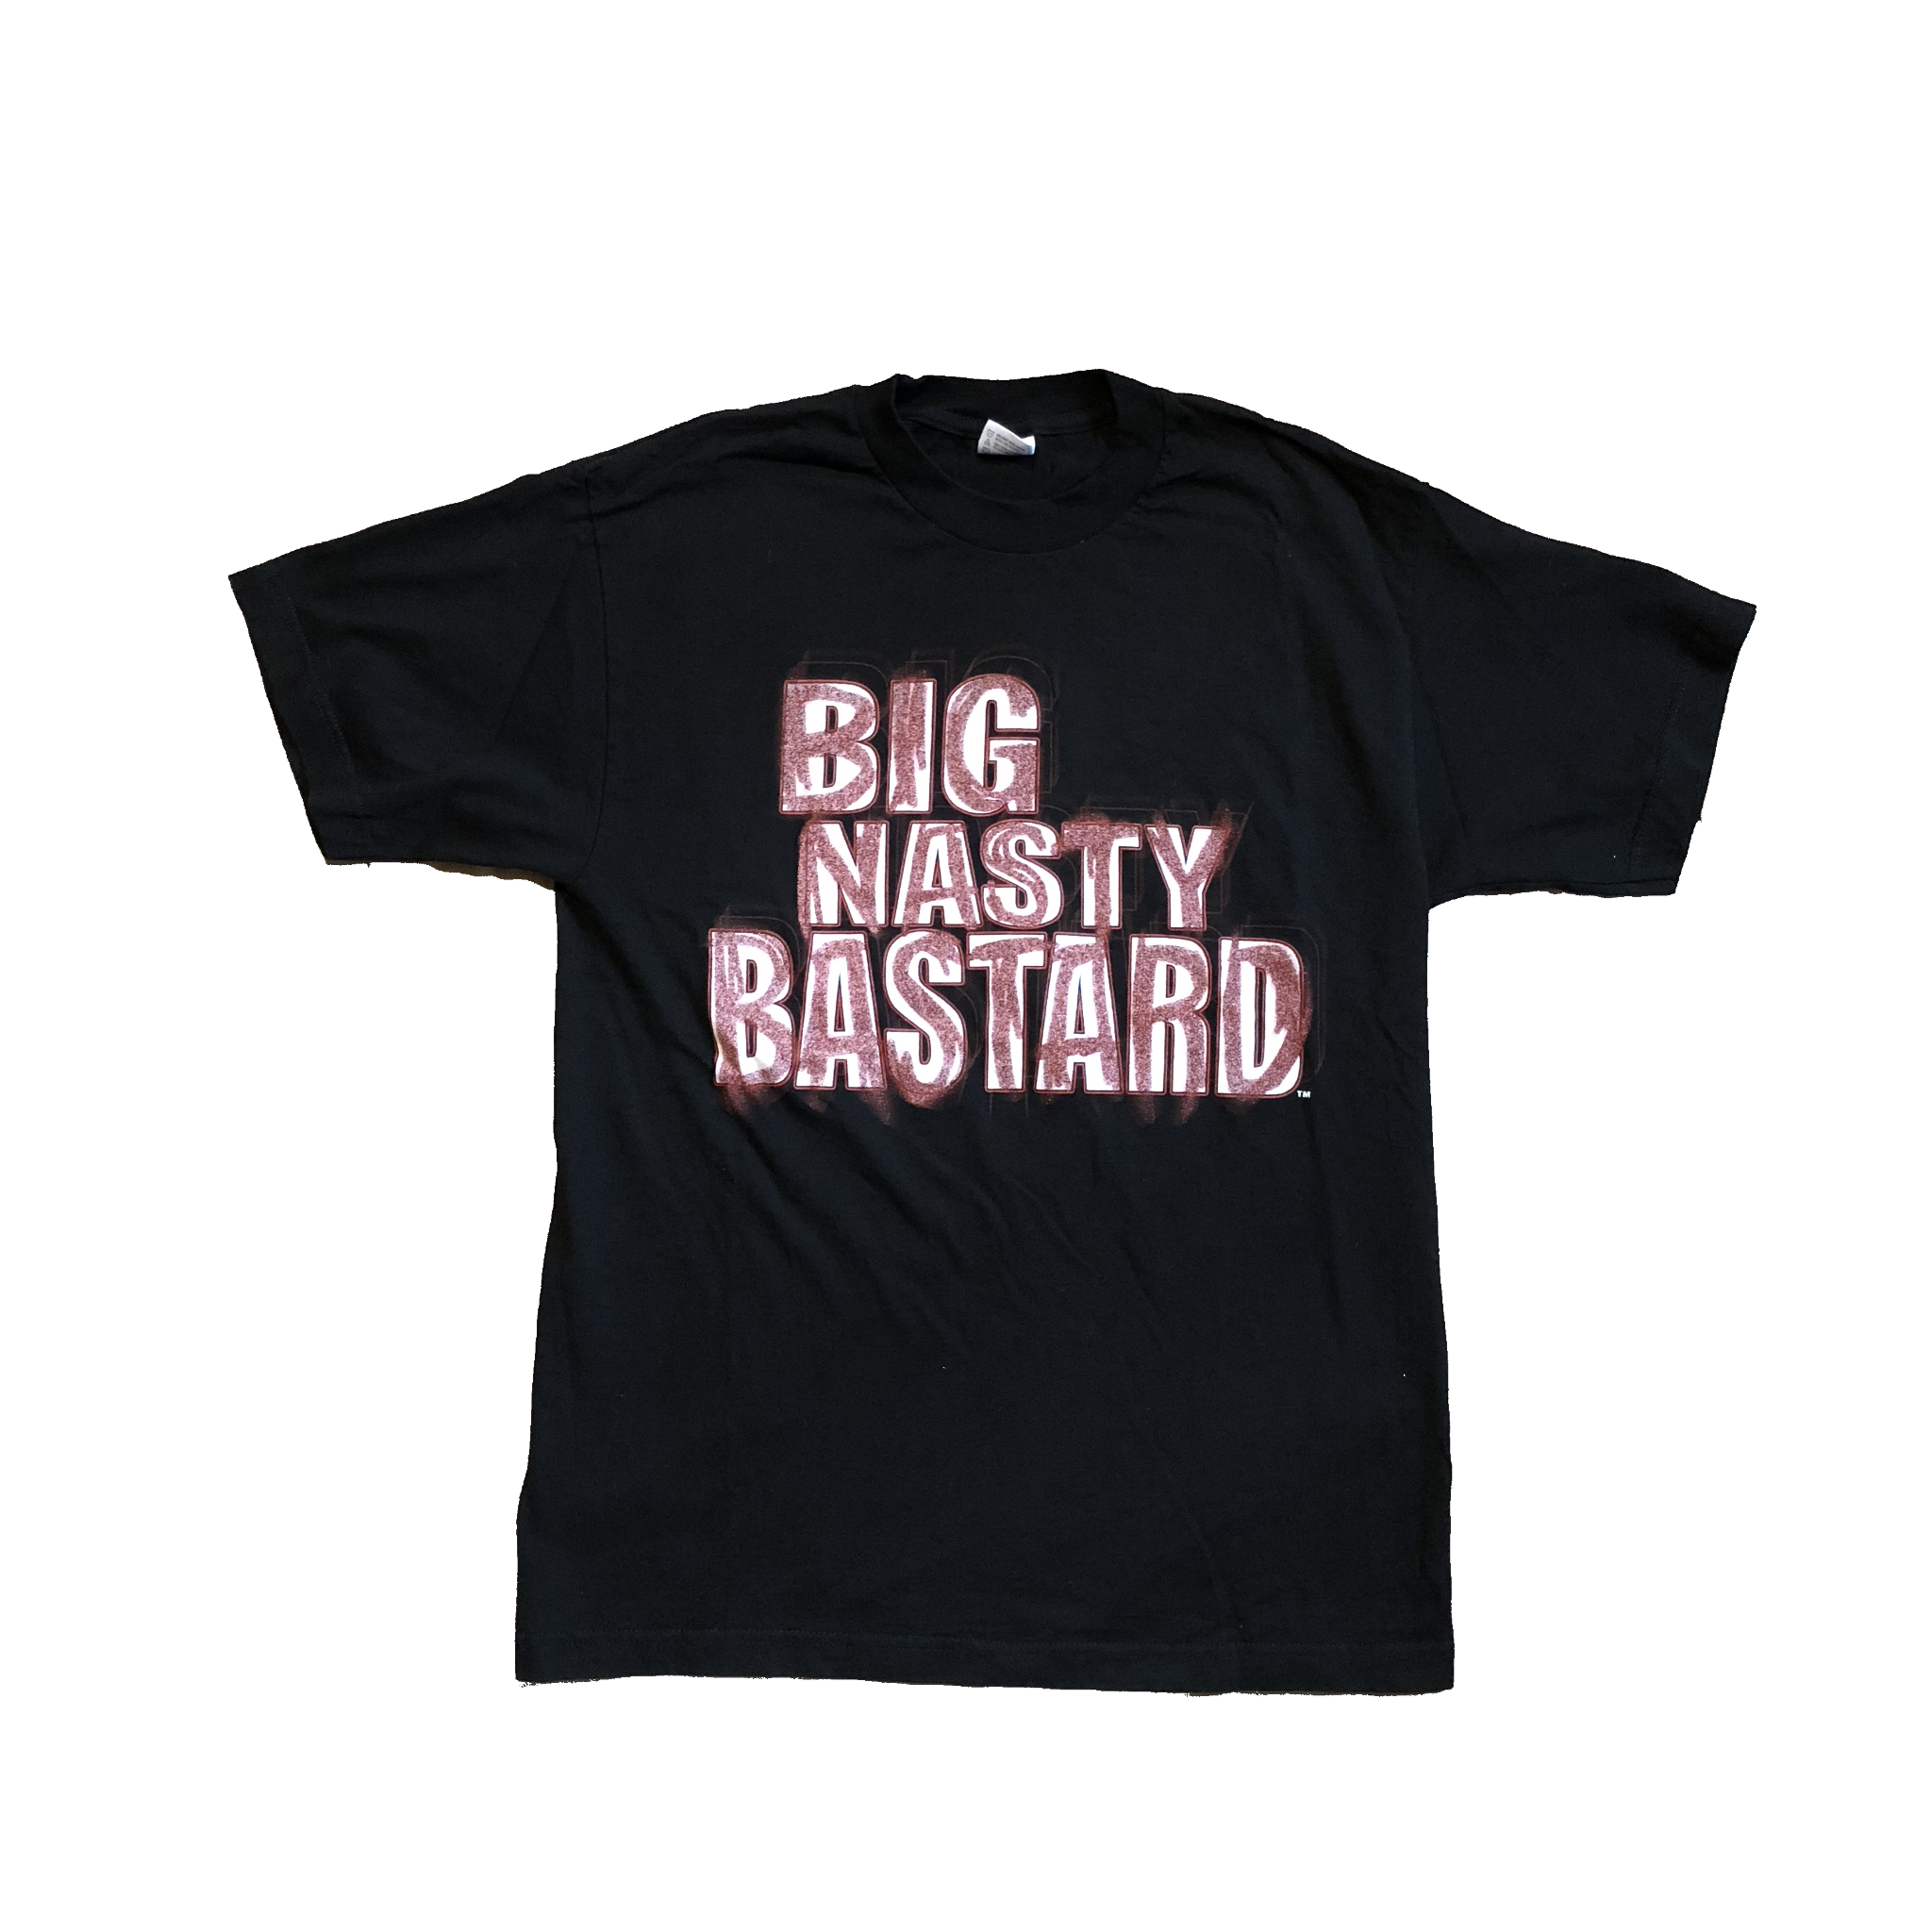 2000 WWF Big Show "Big Nasty Bastard" Shirt Black Size Large - Beyond 94